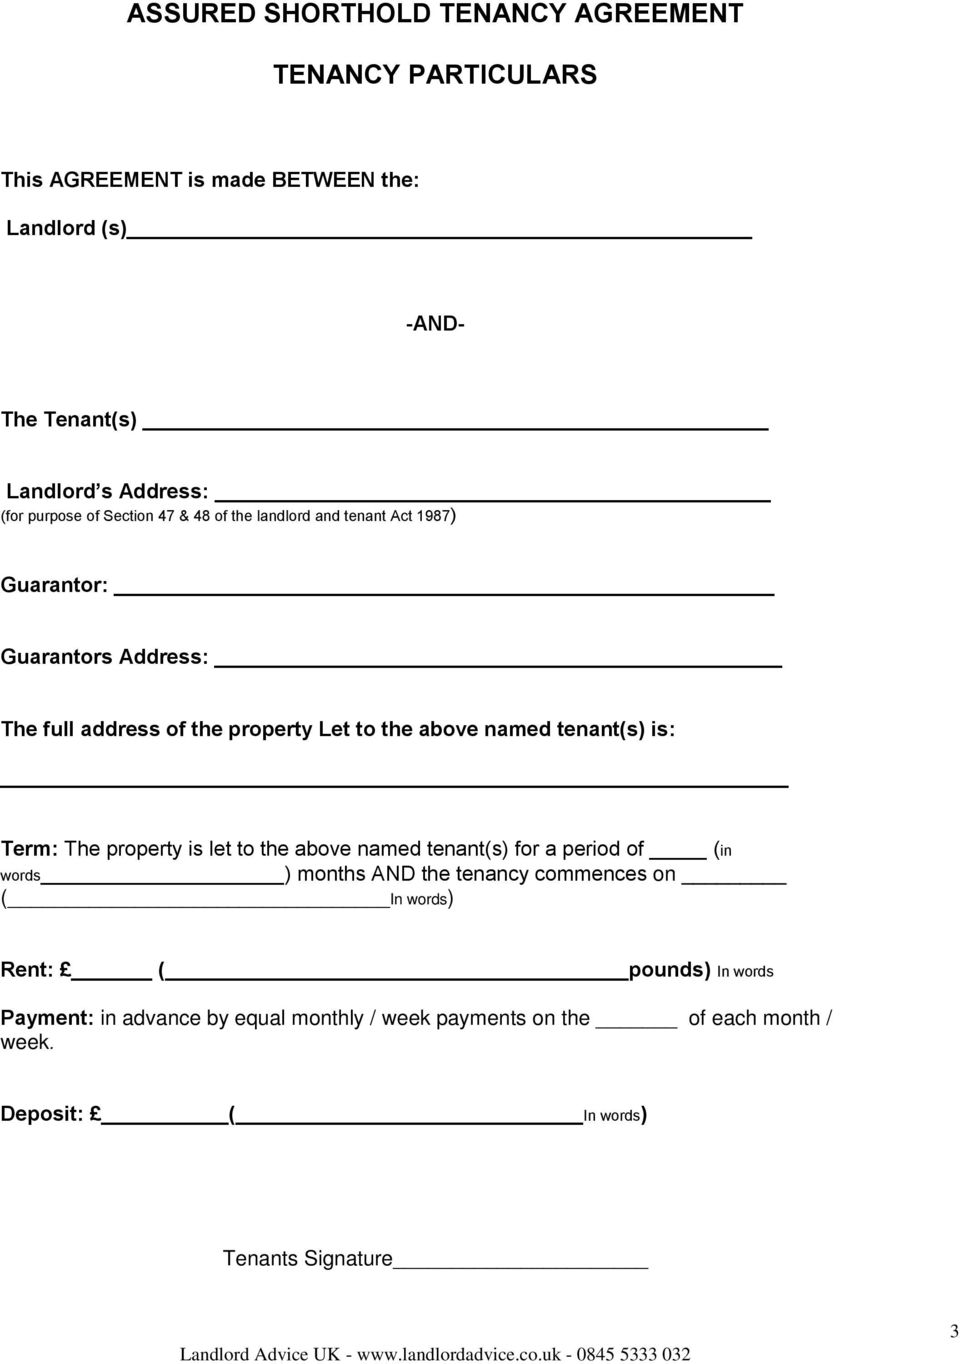 ASSURED SHORTHOLD TENANCY AGREEMENT - PDF Free Download For assured shorthold tenancy agreement template